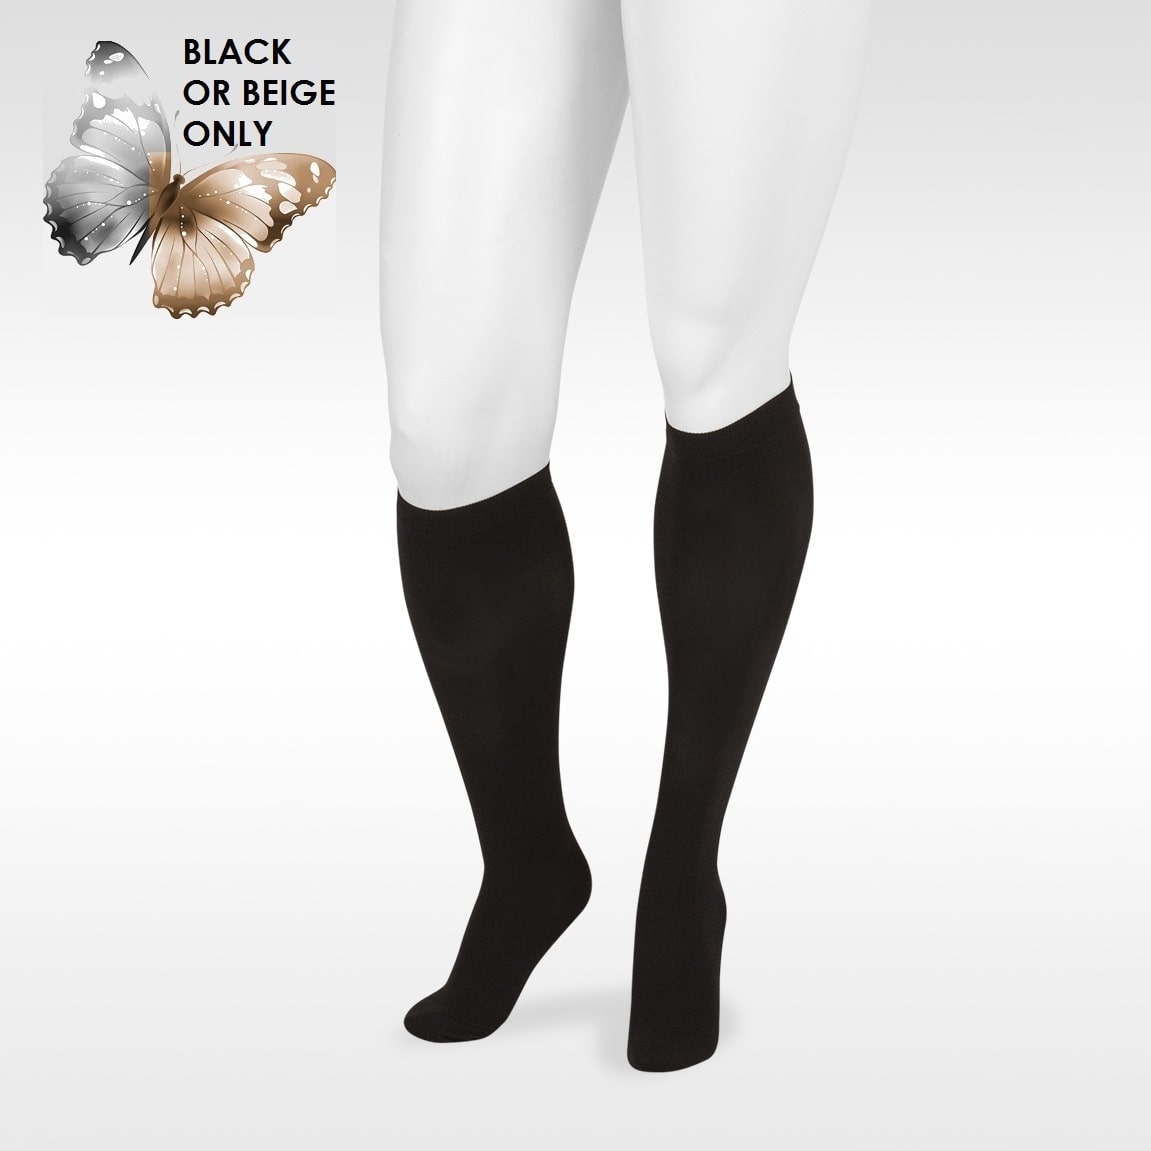 Rejuva® Camo Knee High 15-20 mmHg – Compression Stockings